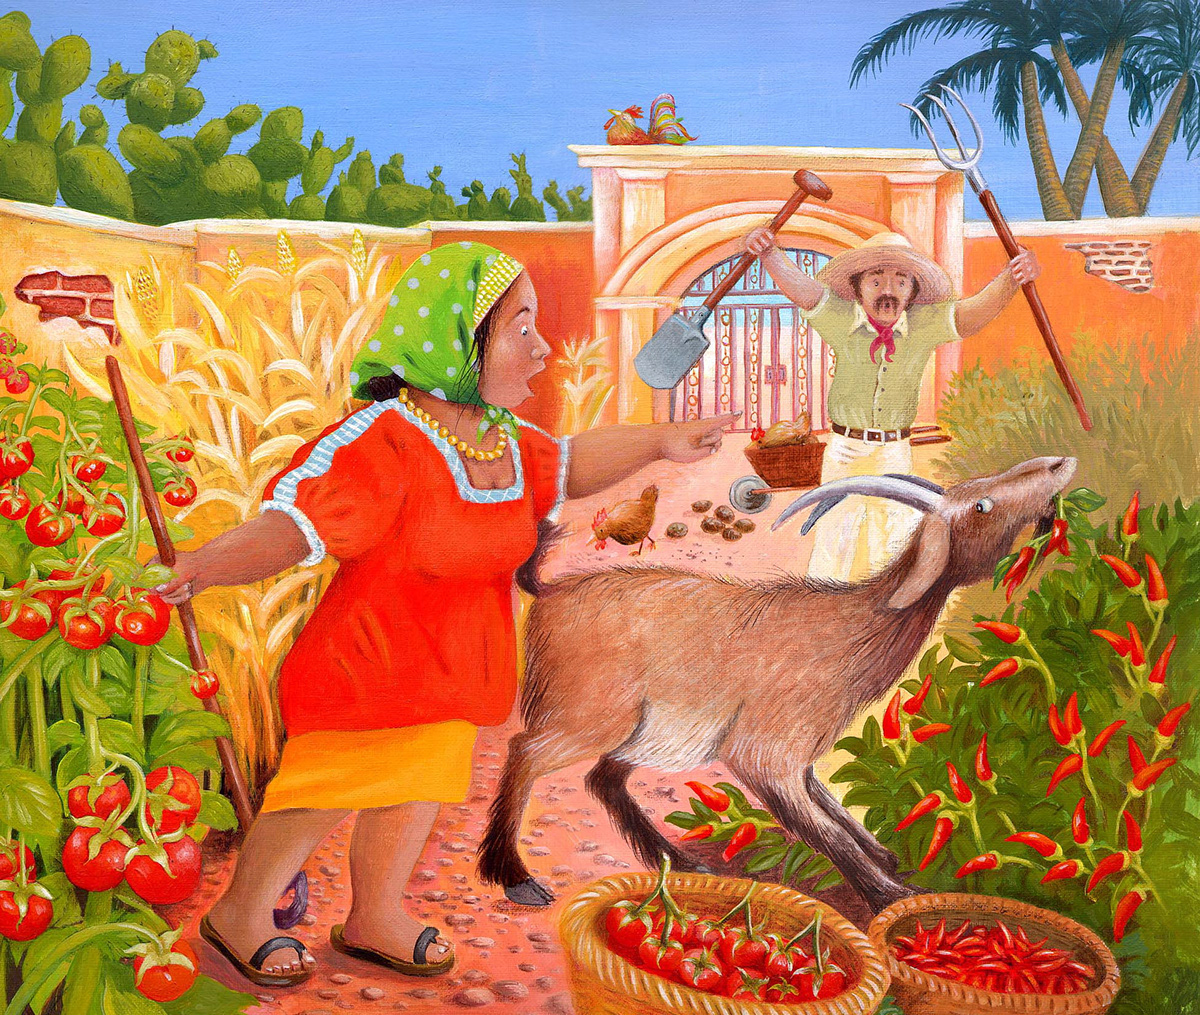 mexico educational children's goat garden